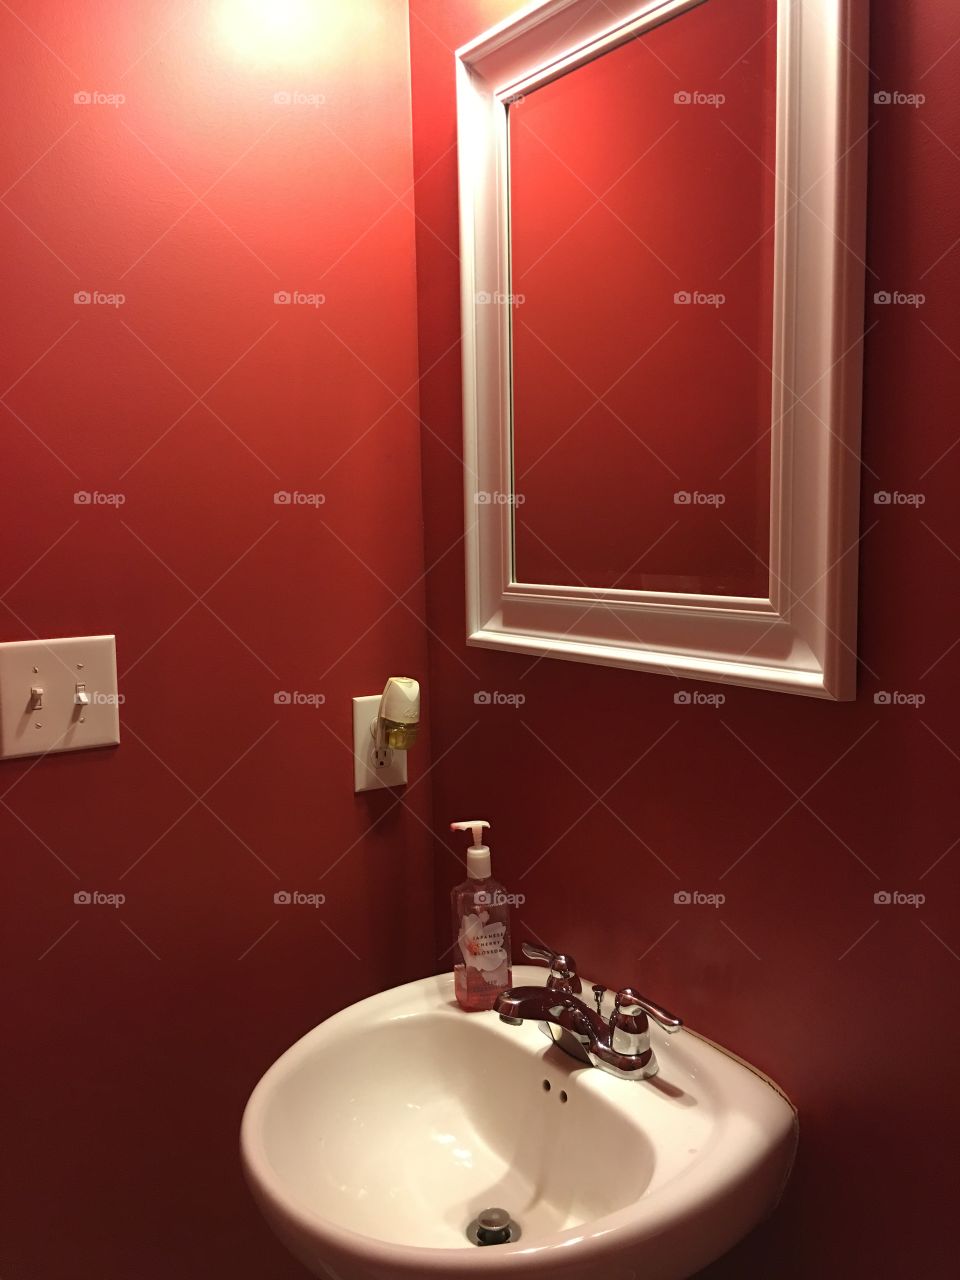 Red bathroom. 